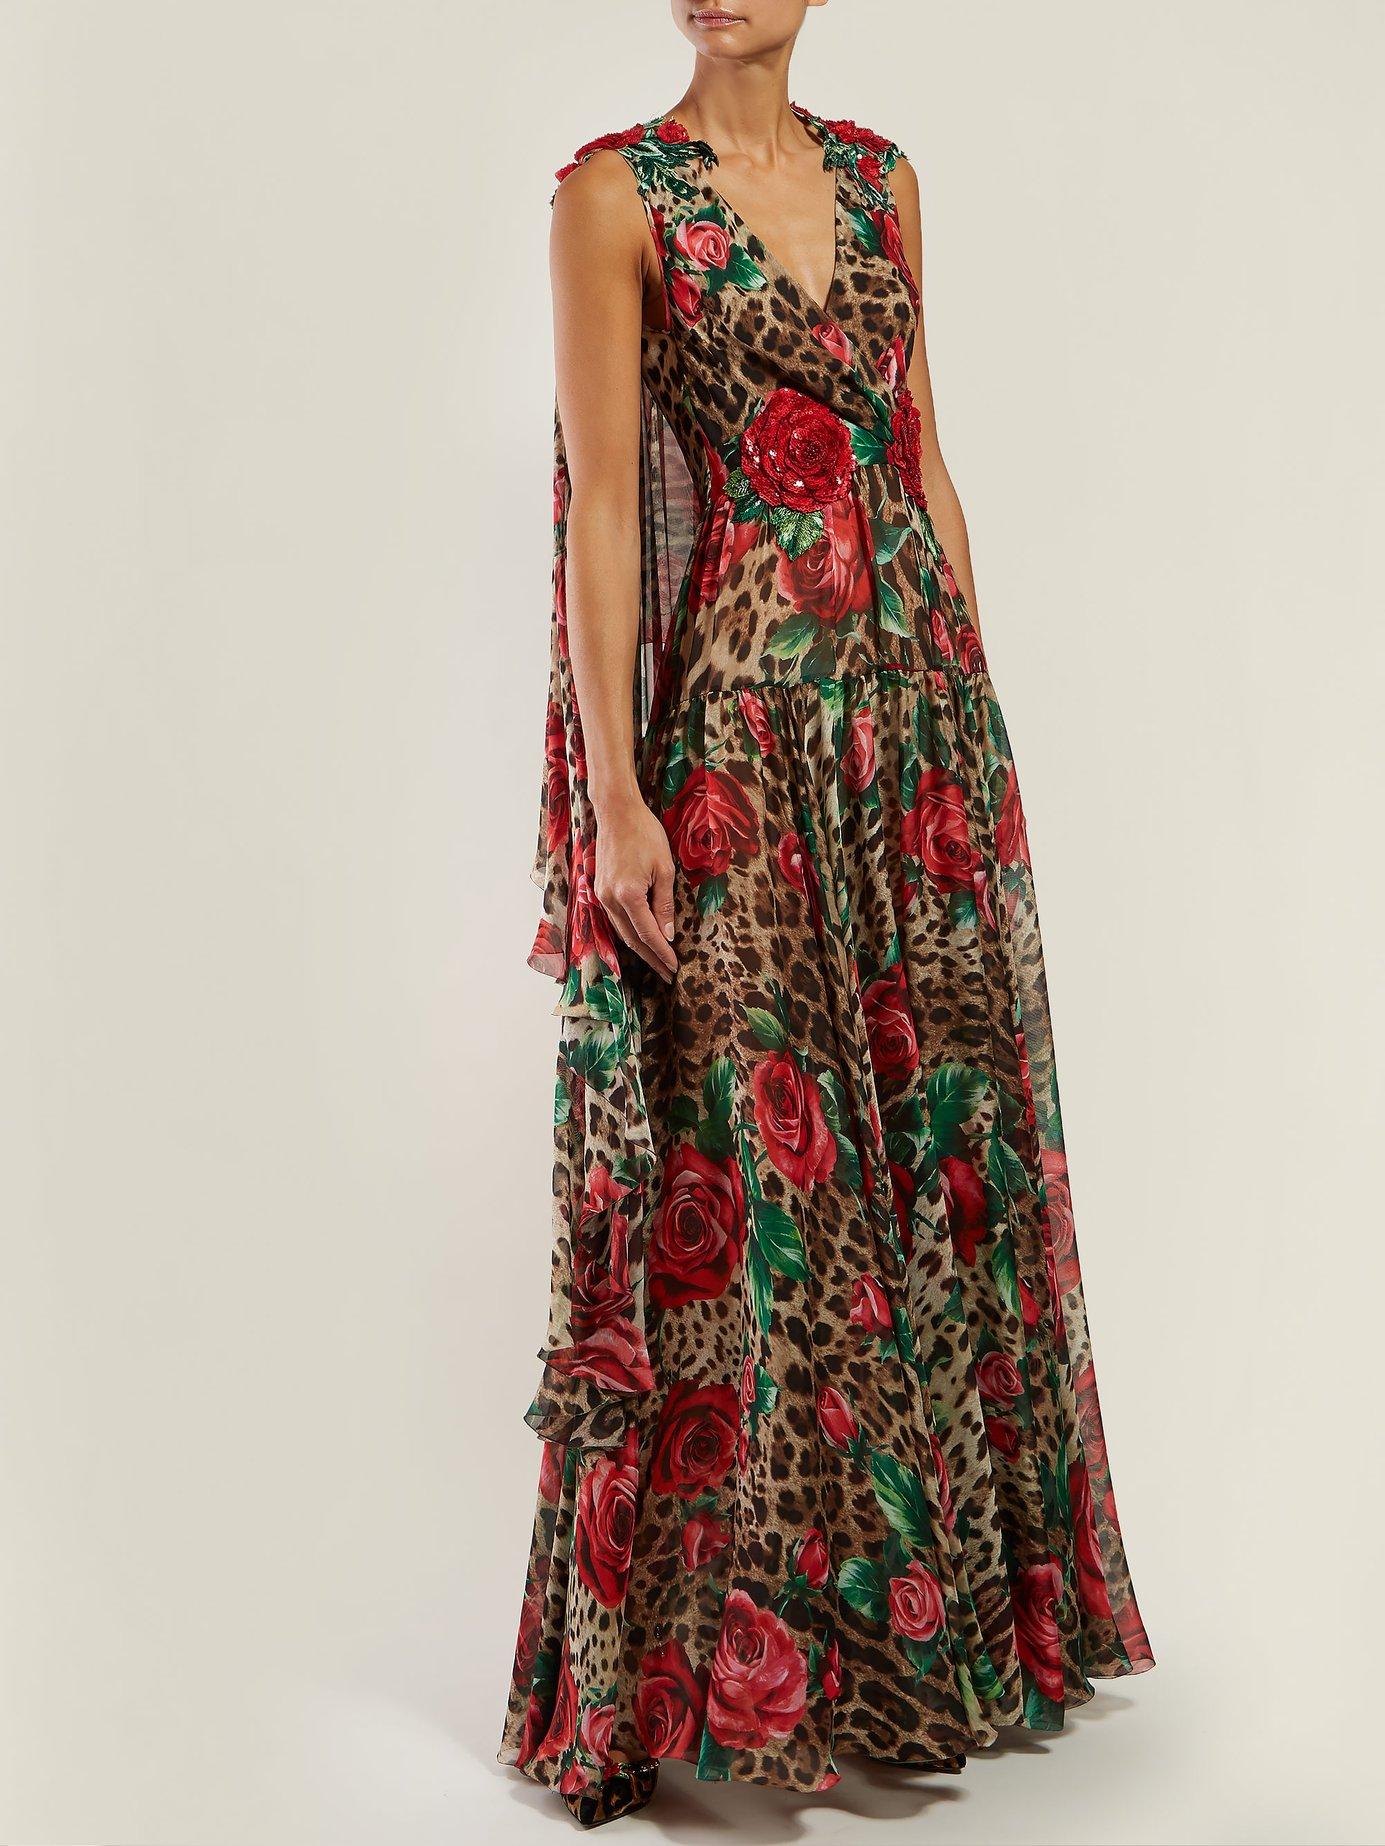 dolce gabbana leopard rose dress